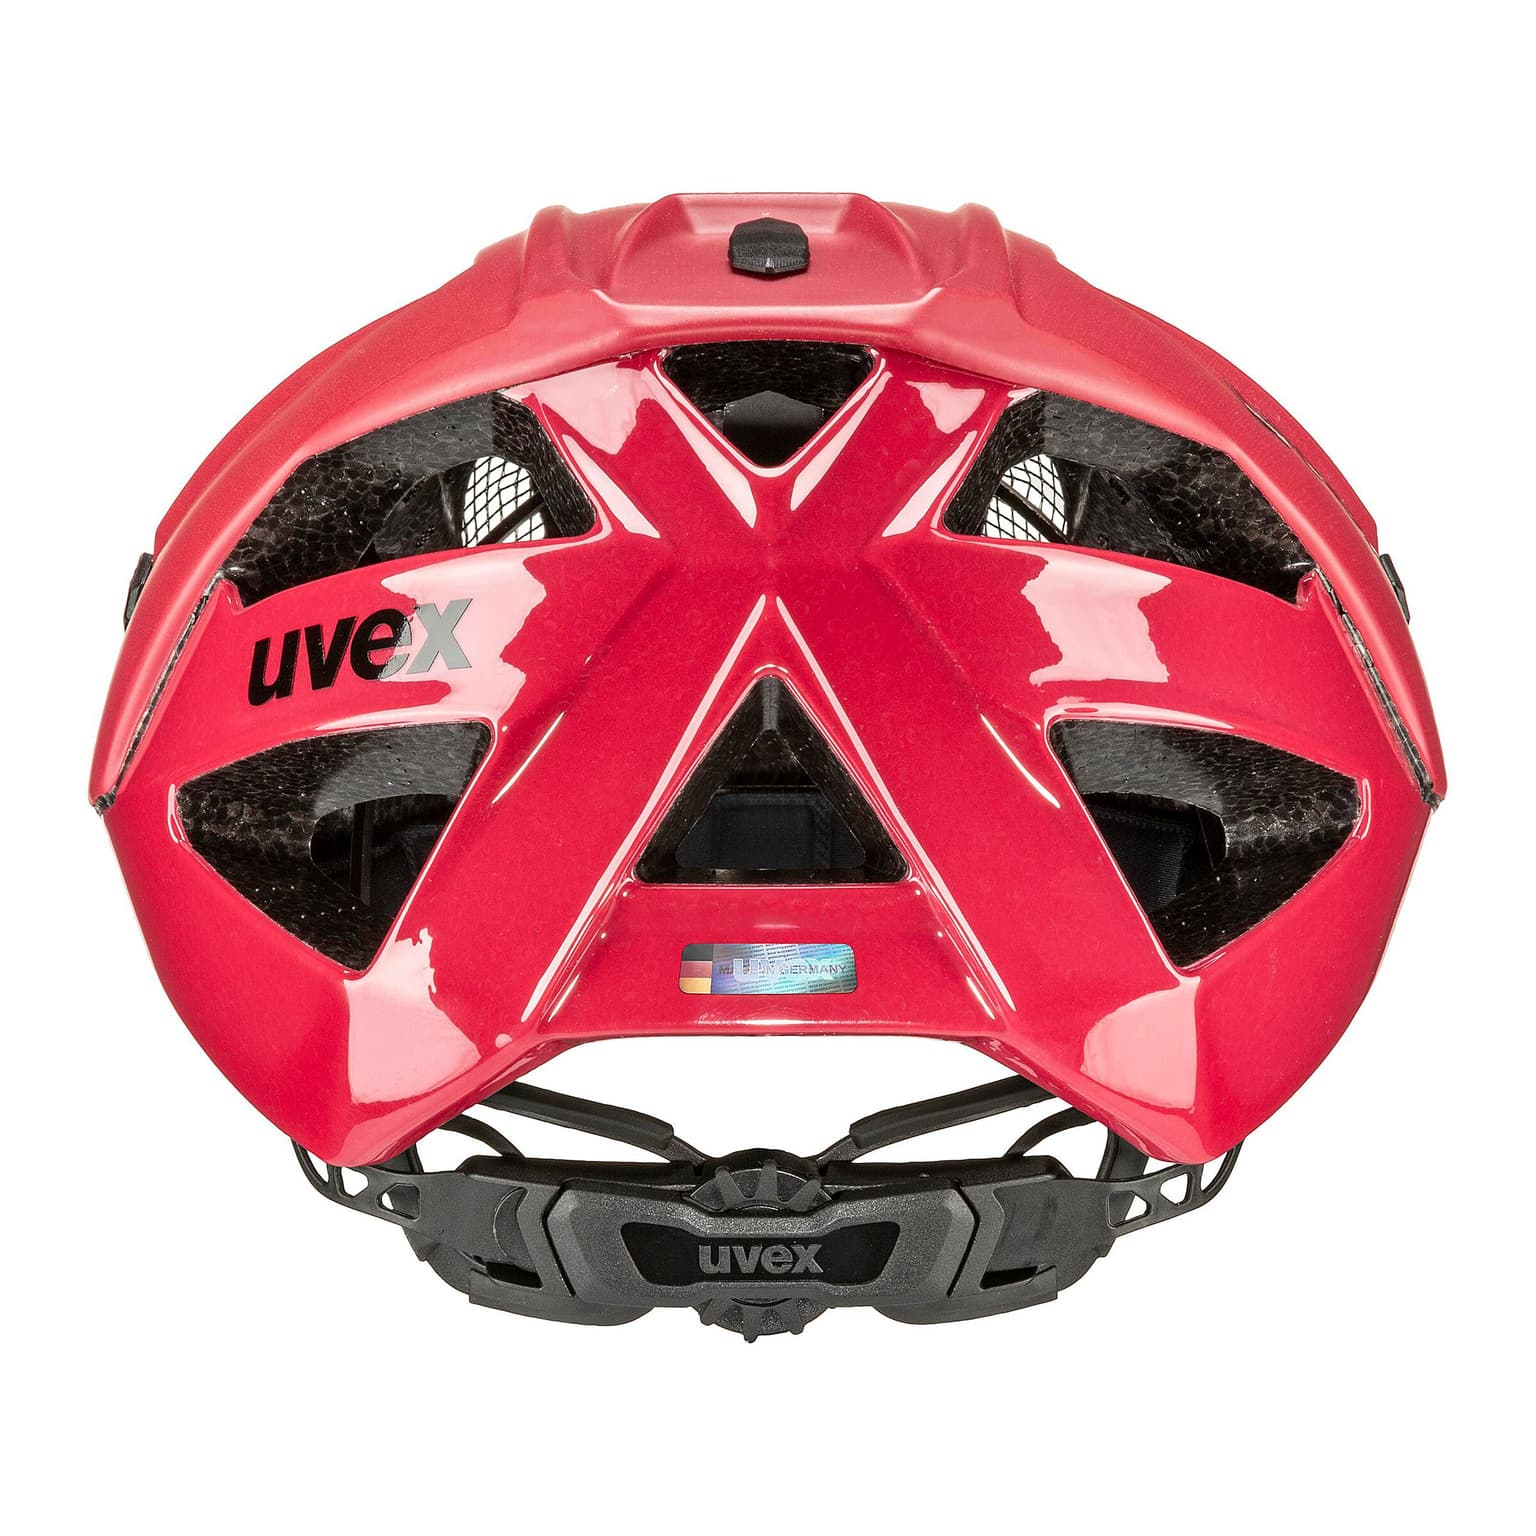 Uvex Uvex Quatro cc Casco da bicicletta rosso 5